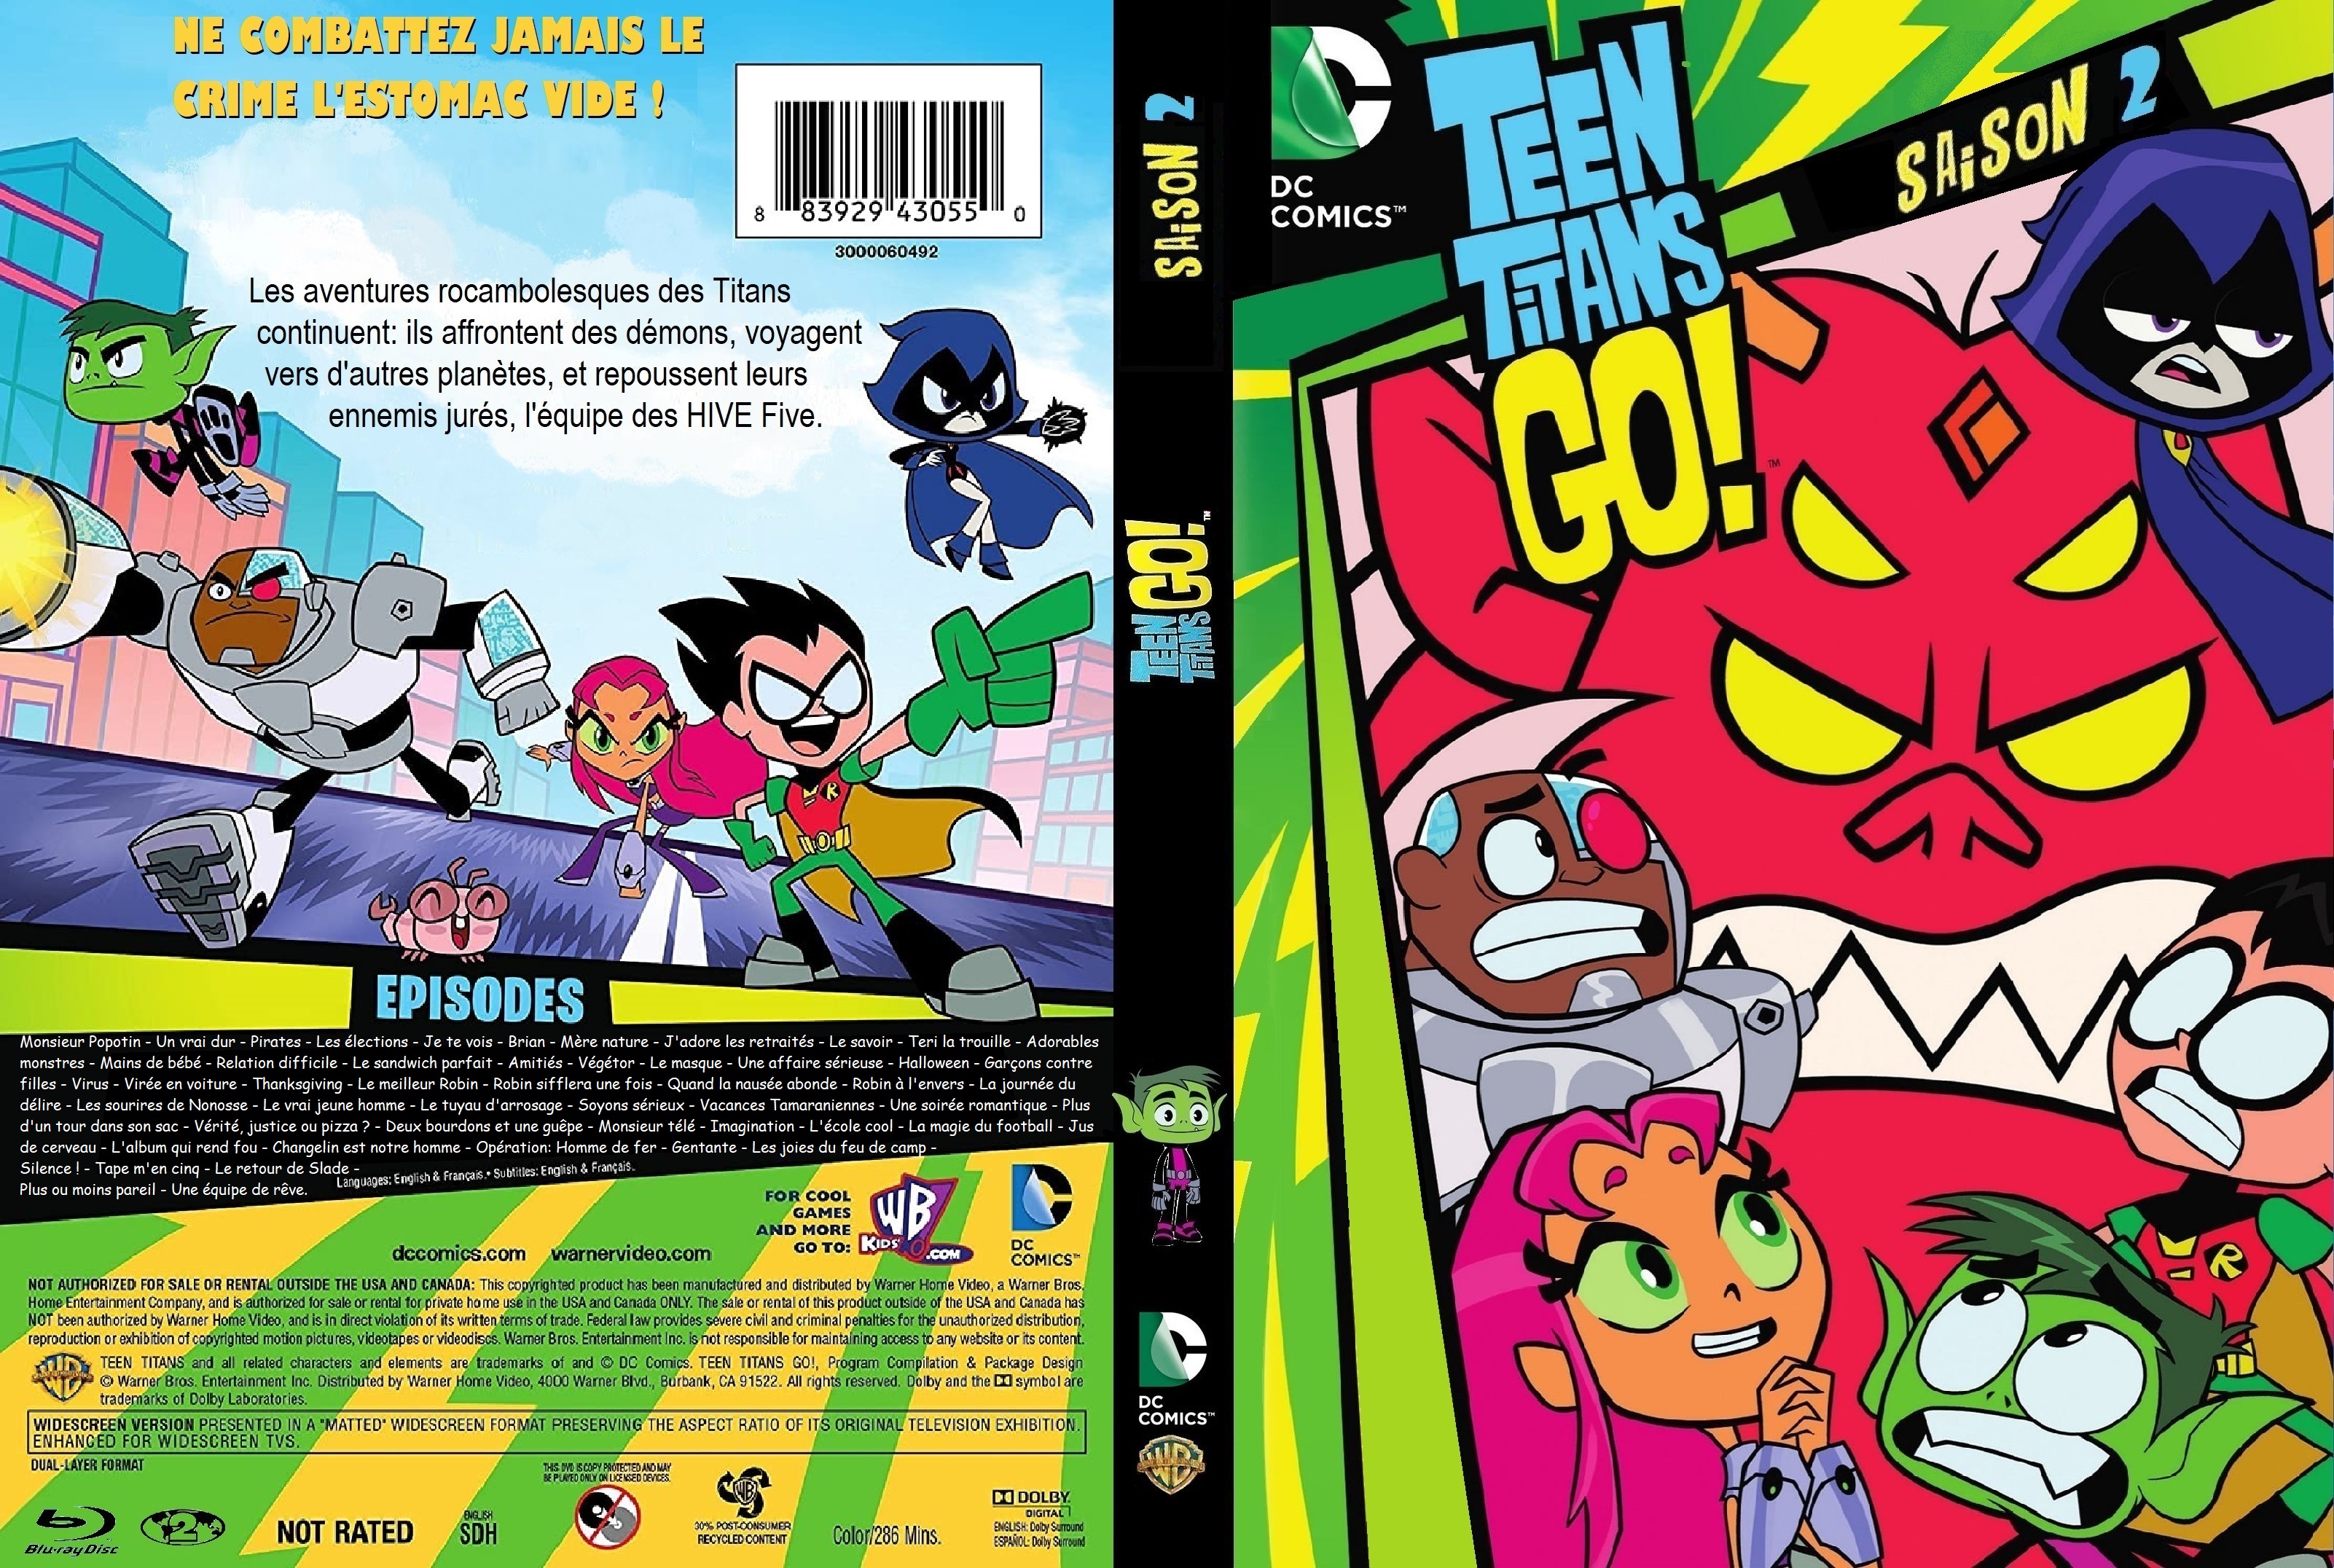 Jaquette DVD Teen Titans Go! saison 2 custom